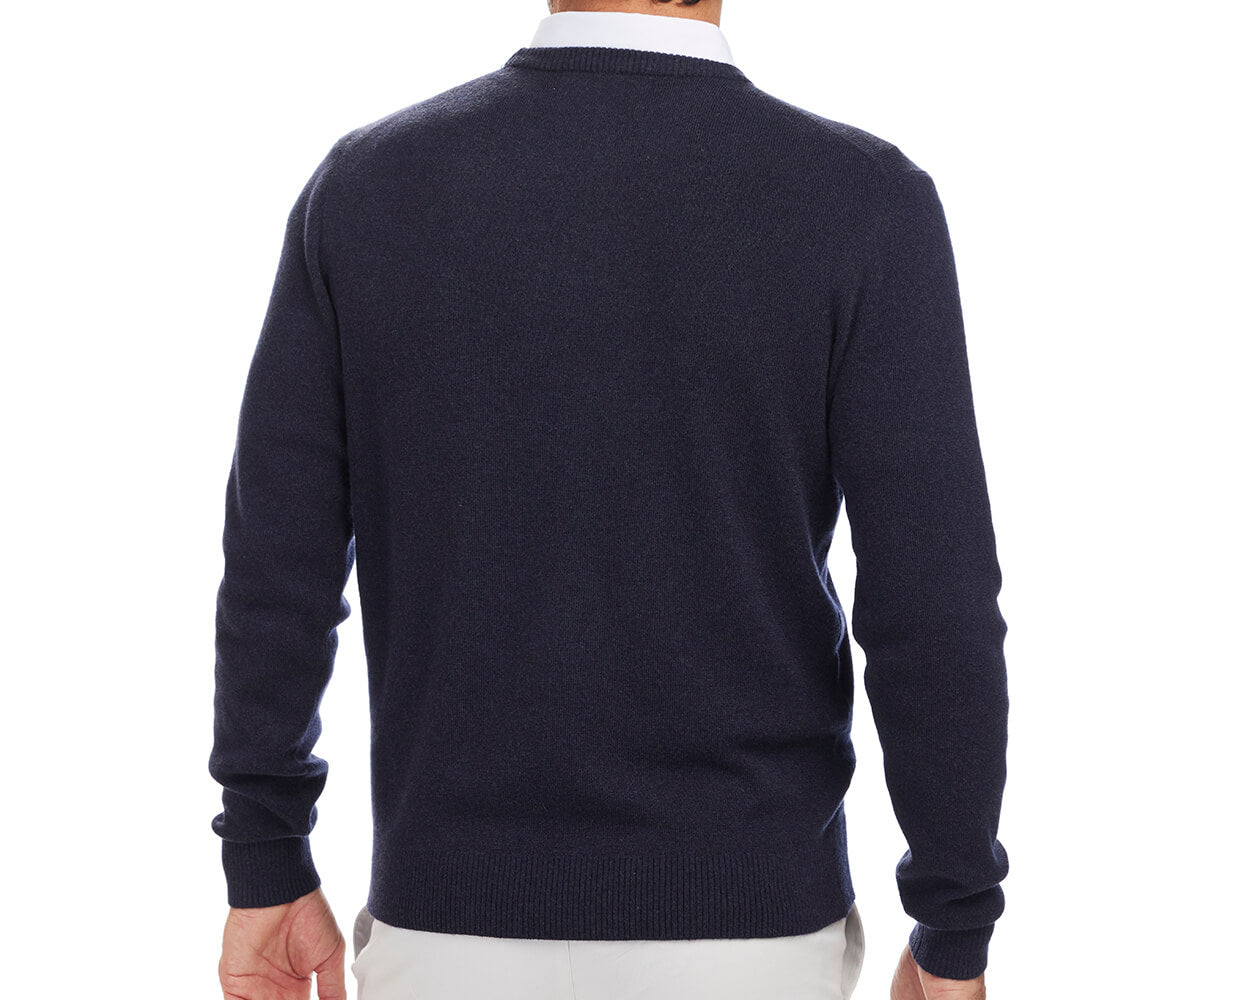 Back shot of Holderness and Bourne navy golf sweater modeled on man's torso.